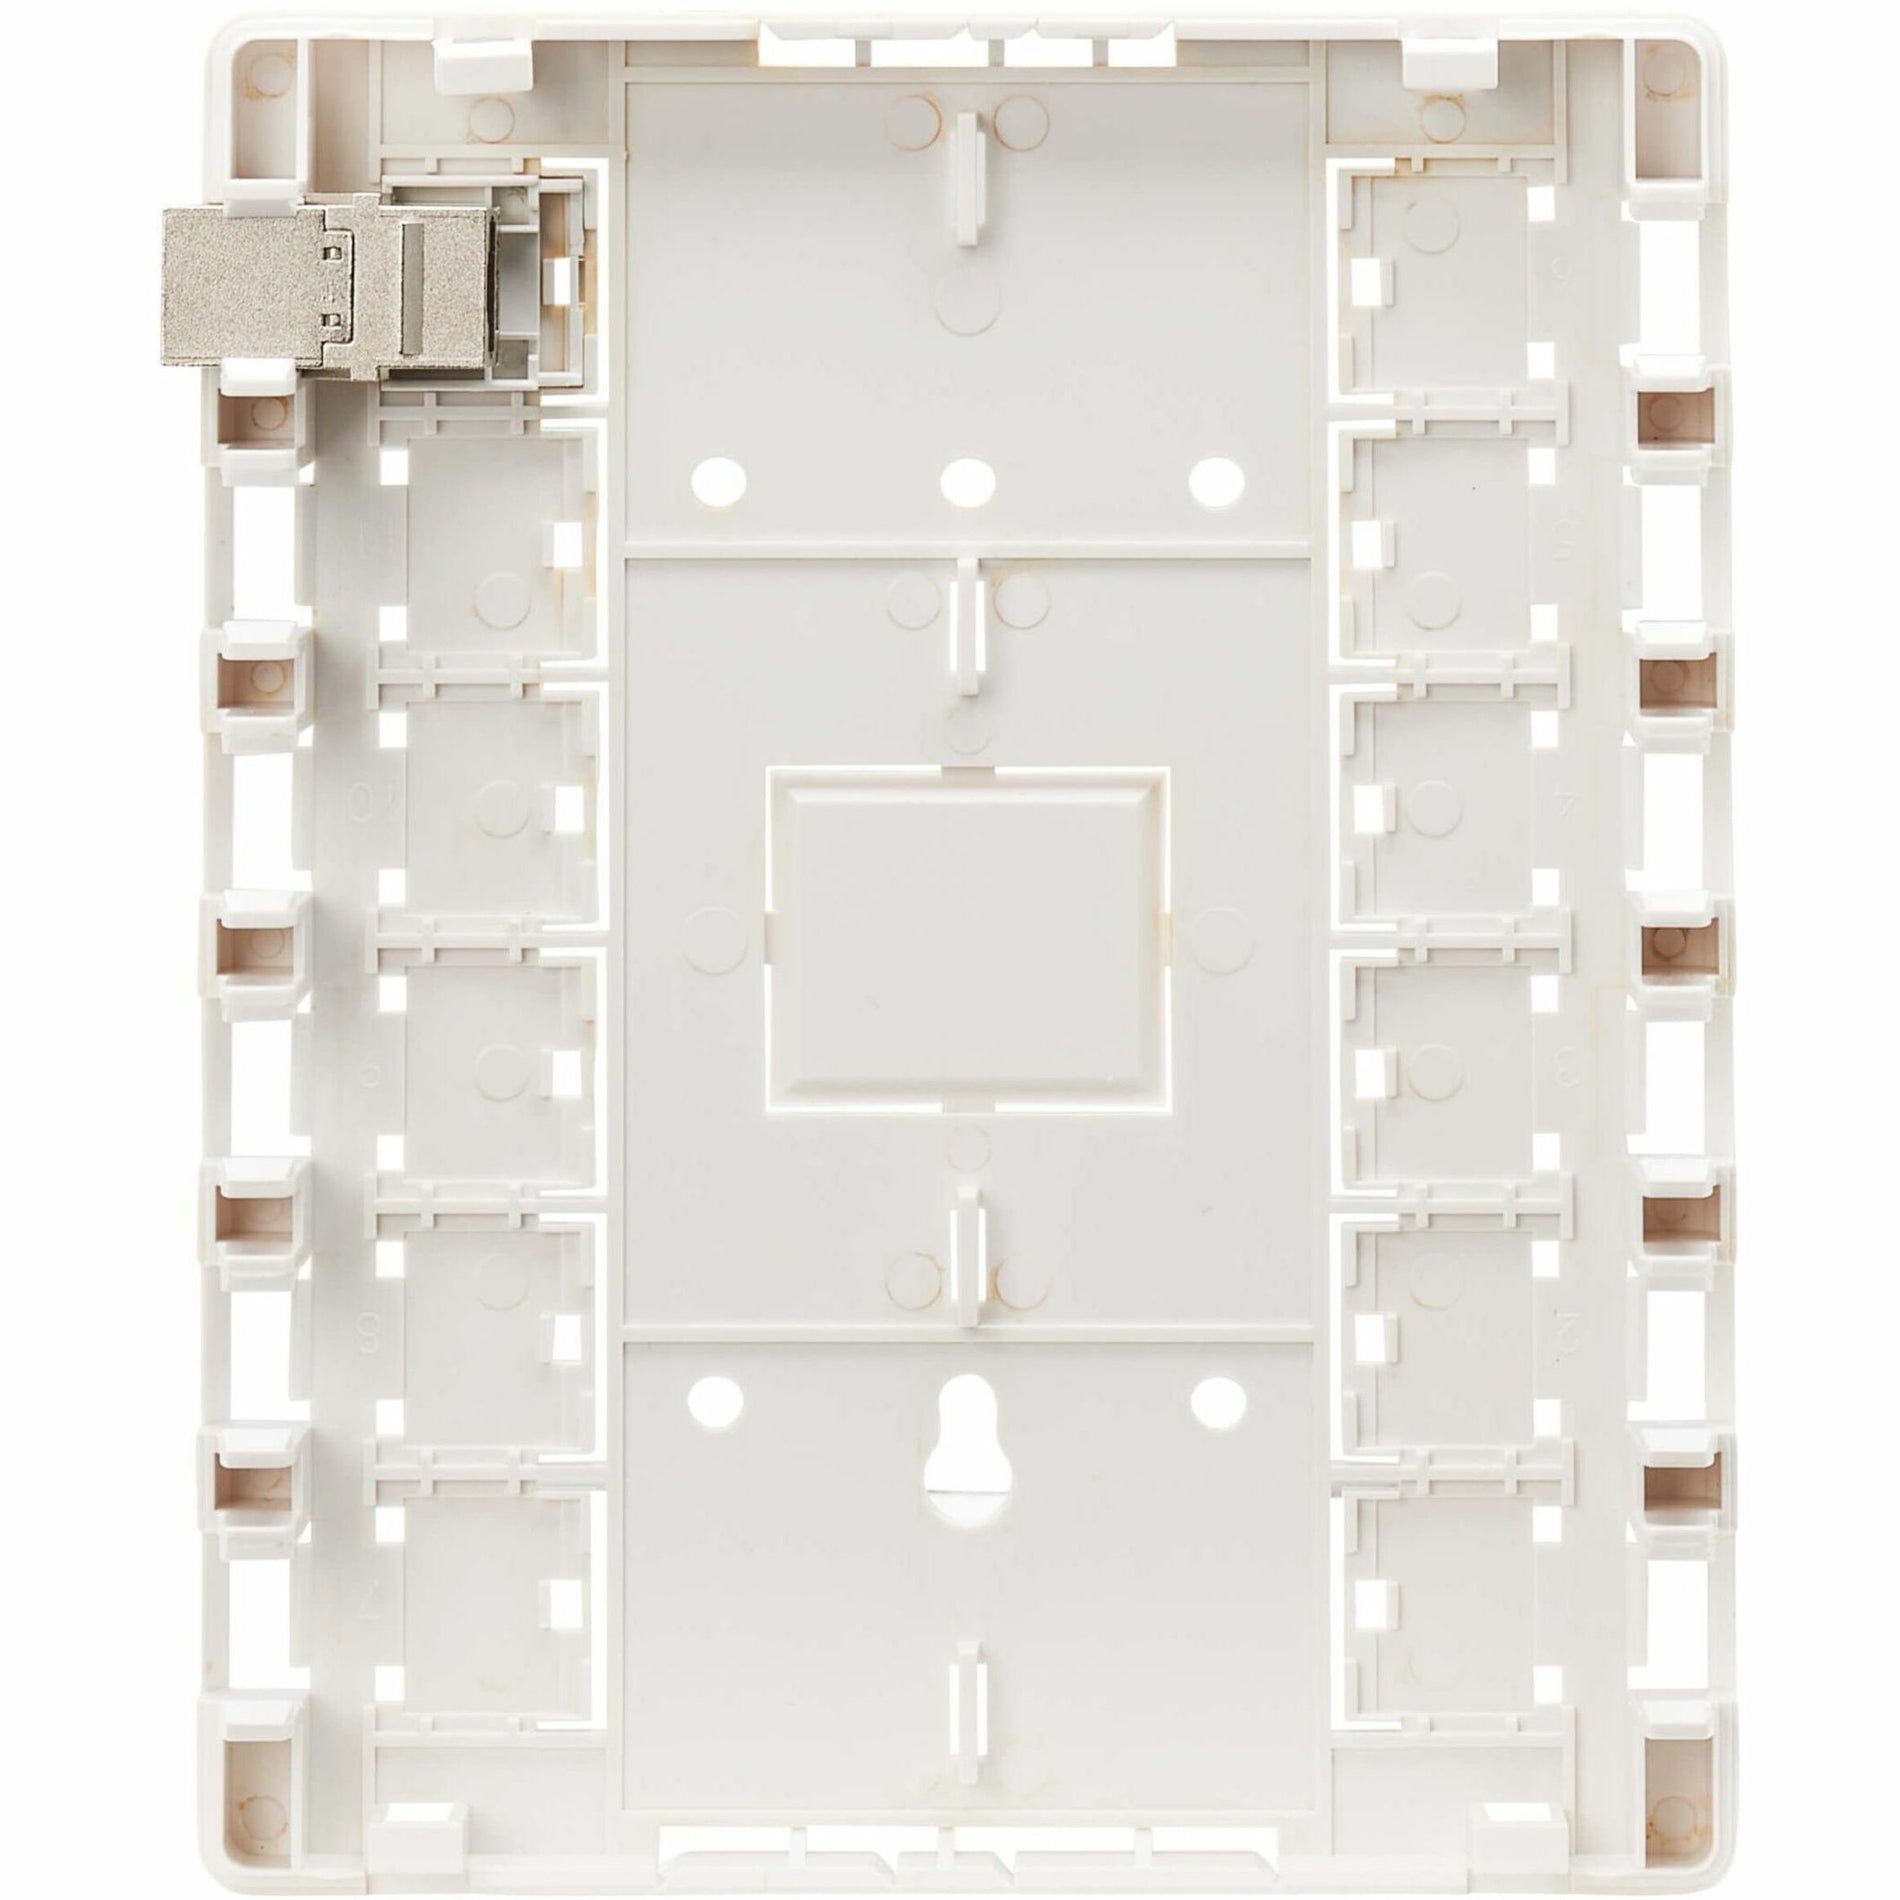 Tripp Lite N082-012-WH Surface-Mount Box for Keystone Jacks - 12 Ports, White, TAA Compliant, Lifetime Warranty